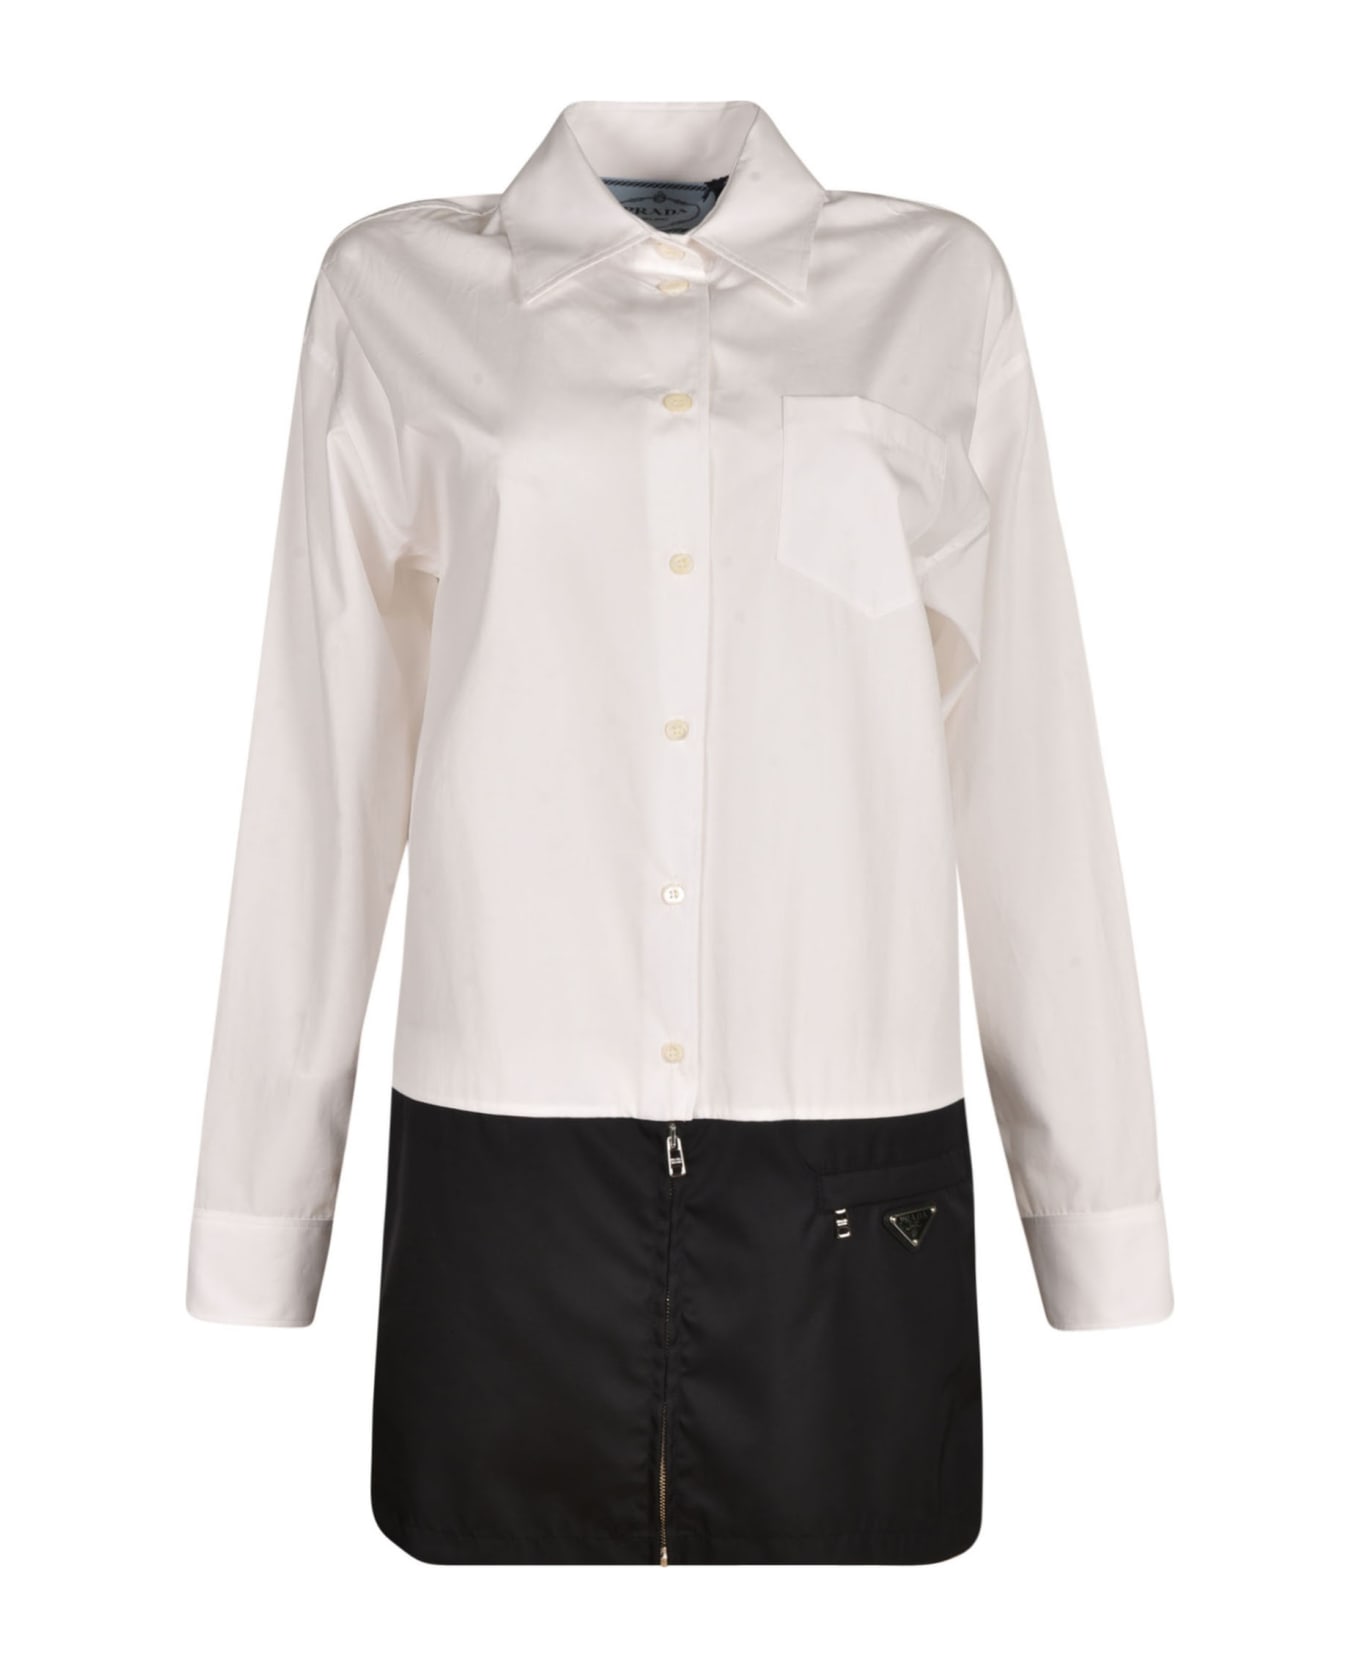 Prada Buttoned Shirt Dress - White/Black シャツ